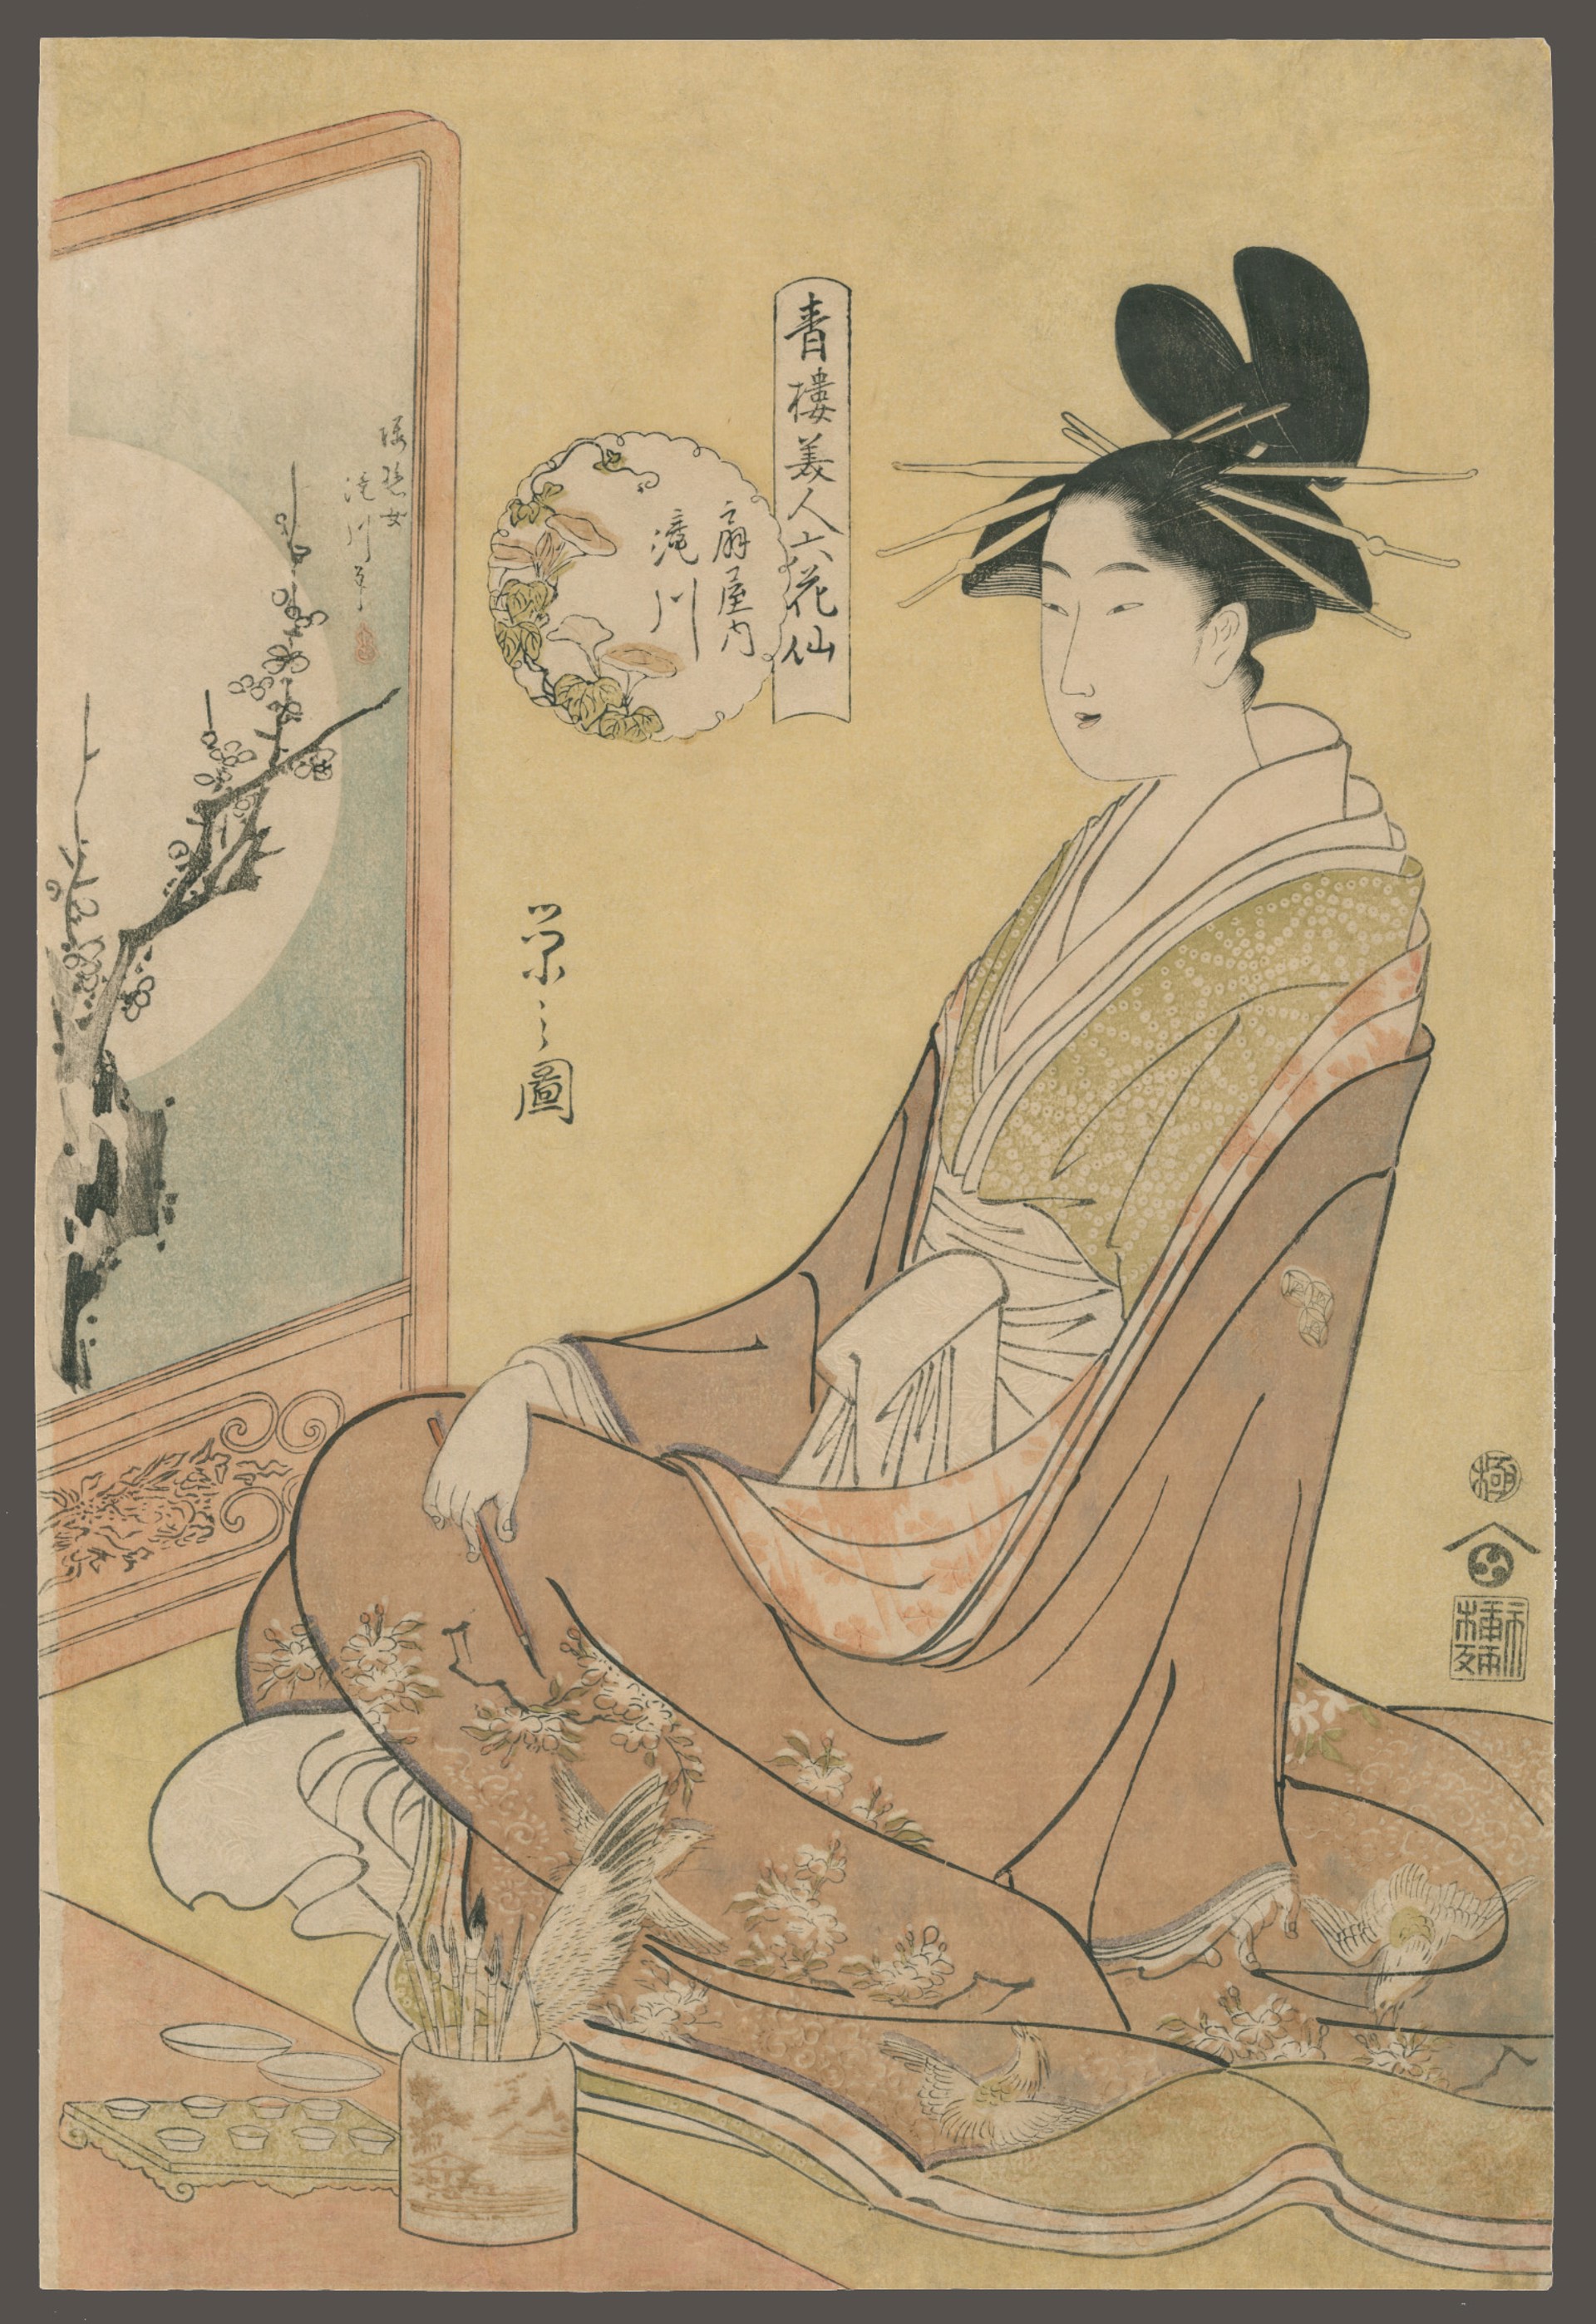 Takigawa of the Ogi-ya Beauties of the Yoshiwara as Six Floral Immortals by Eishi